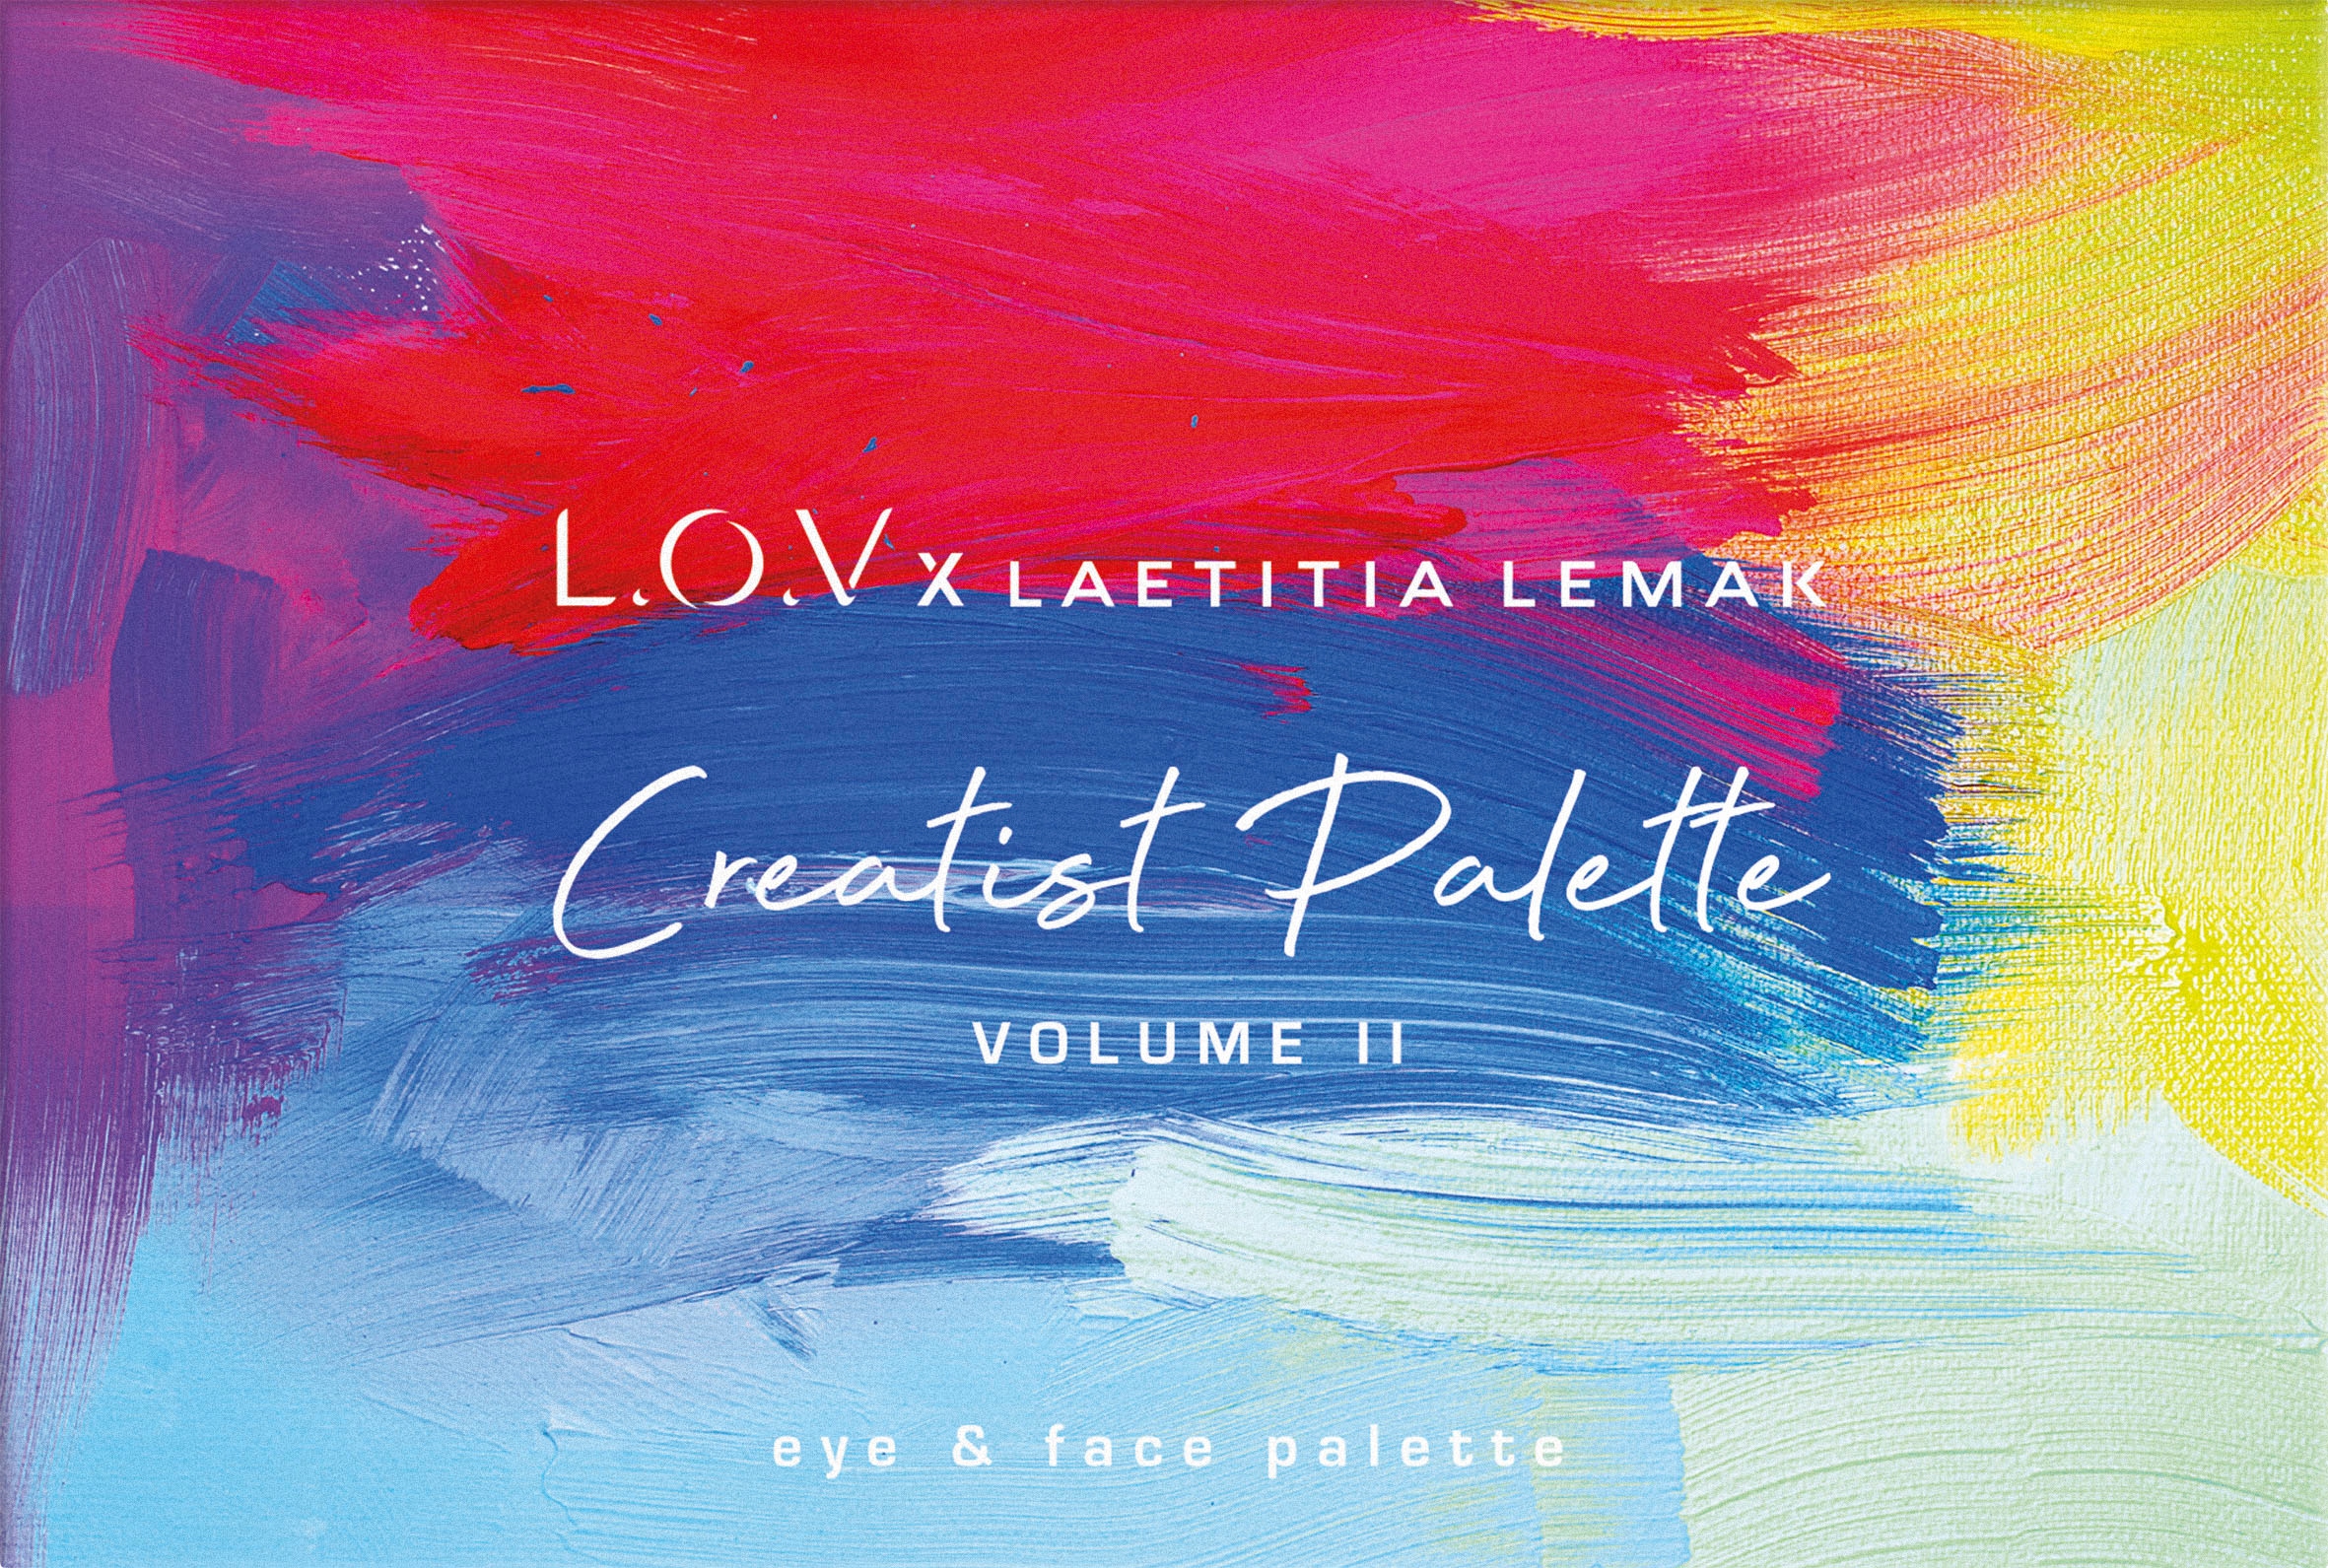 L.O.V Lidschatten-Palette LAETITIA & CREATIST palette« online face LEMAK Volume II »L.O.V x PALETTE eye kaufen